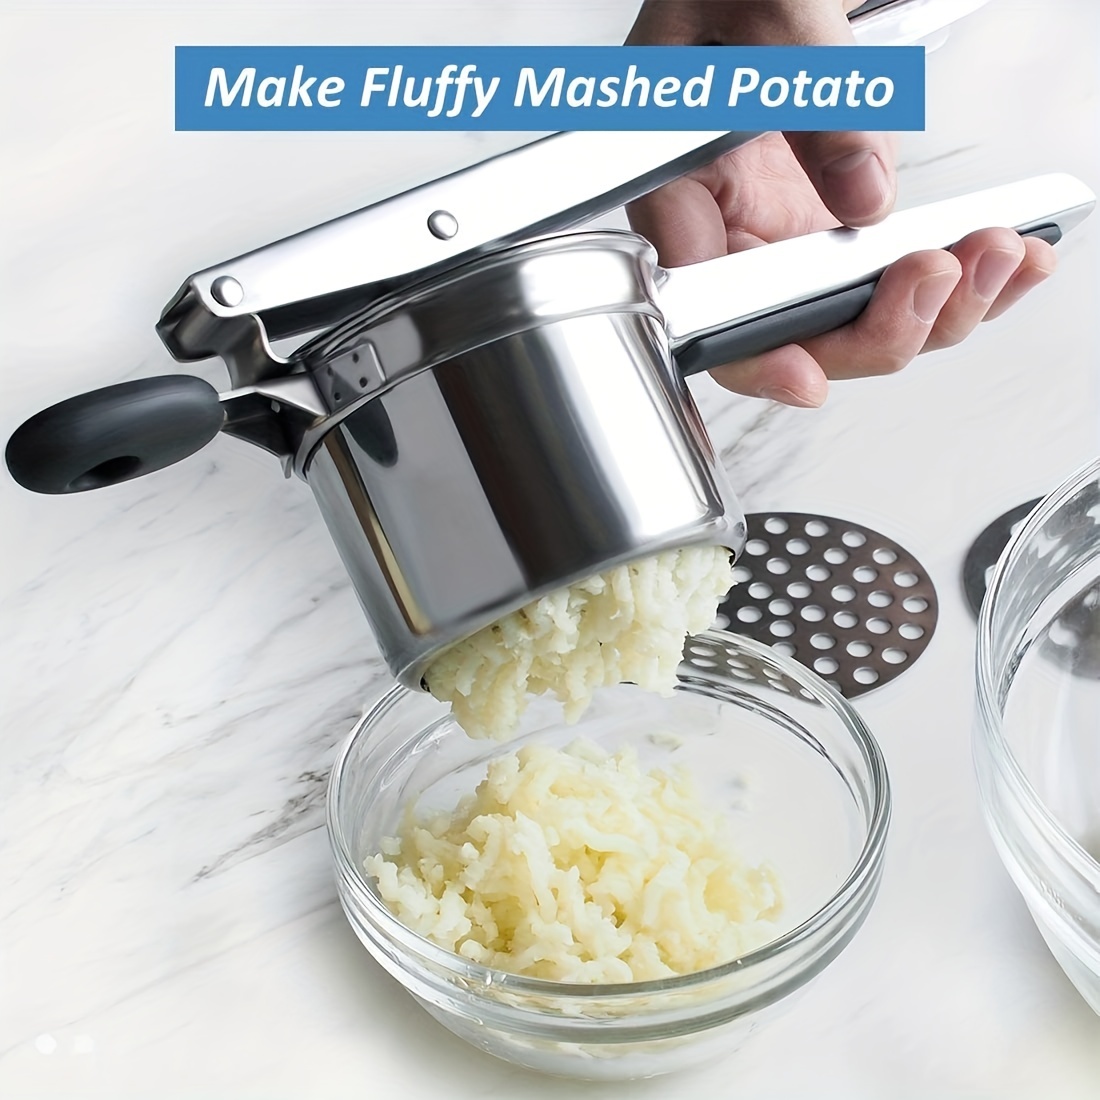 1pc Stainless Steel Potato Masher, Simple Kitchen Tool For Mashed Potato